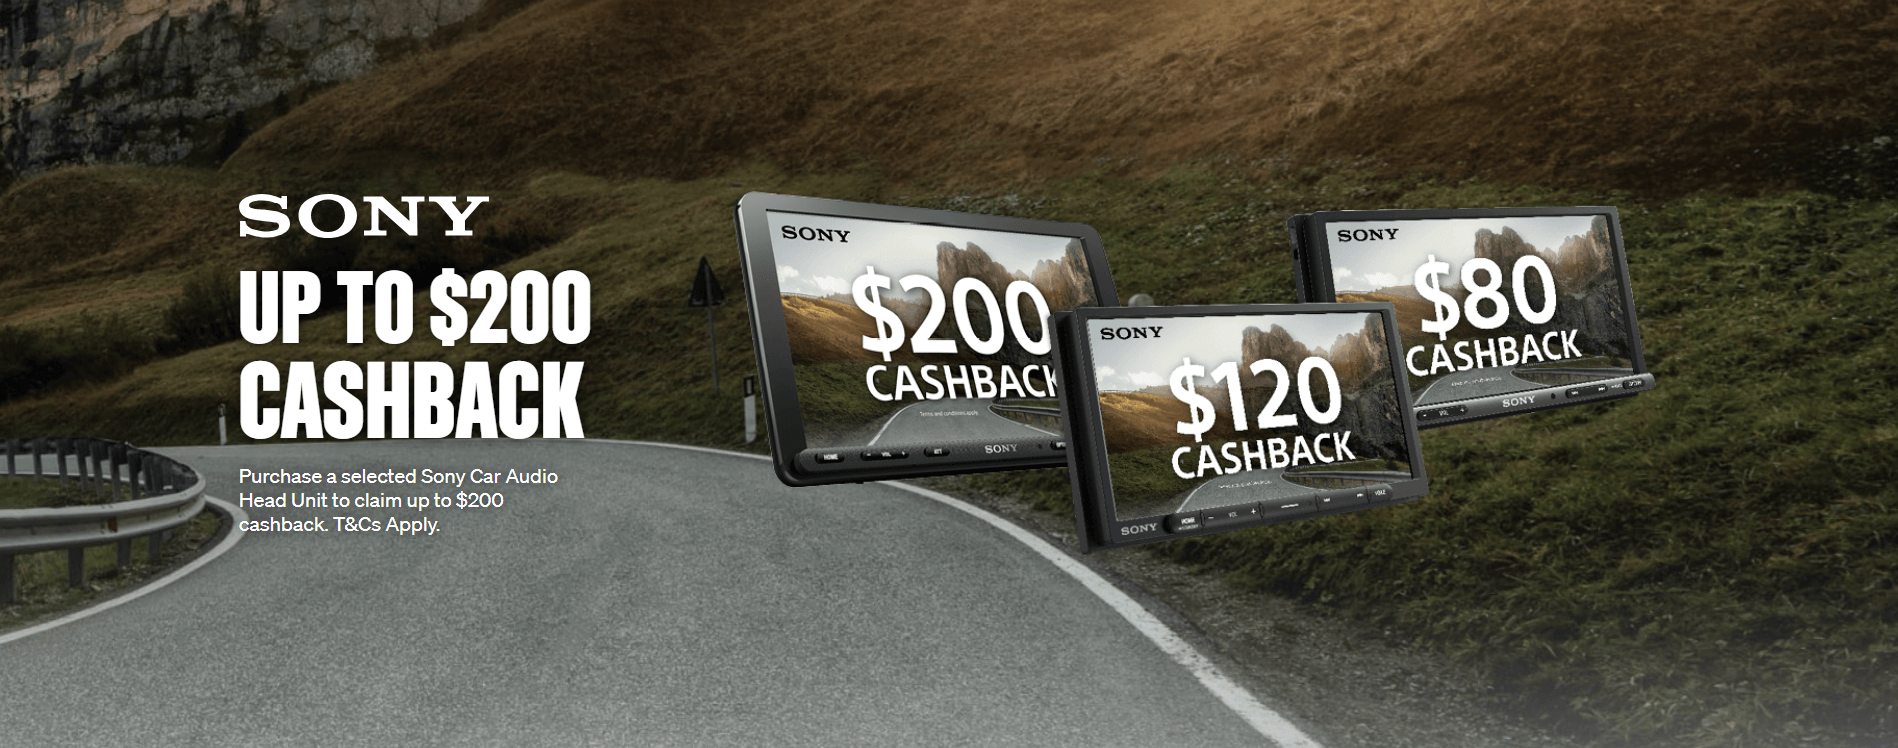 Supercheap Auto - Up To $200 Cashback